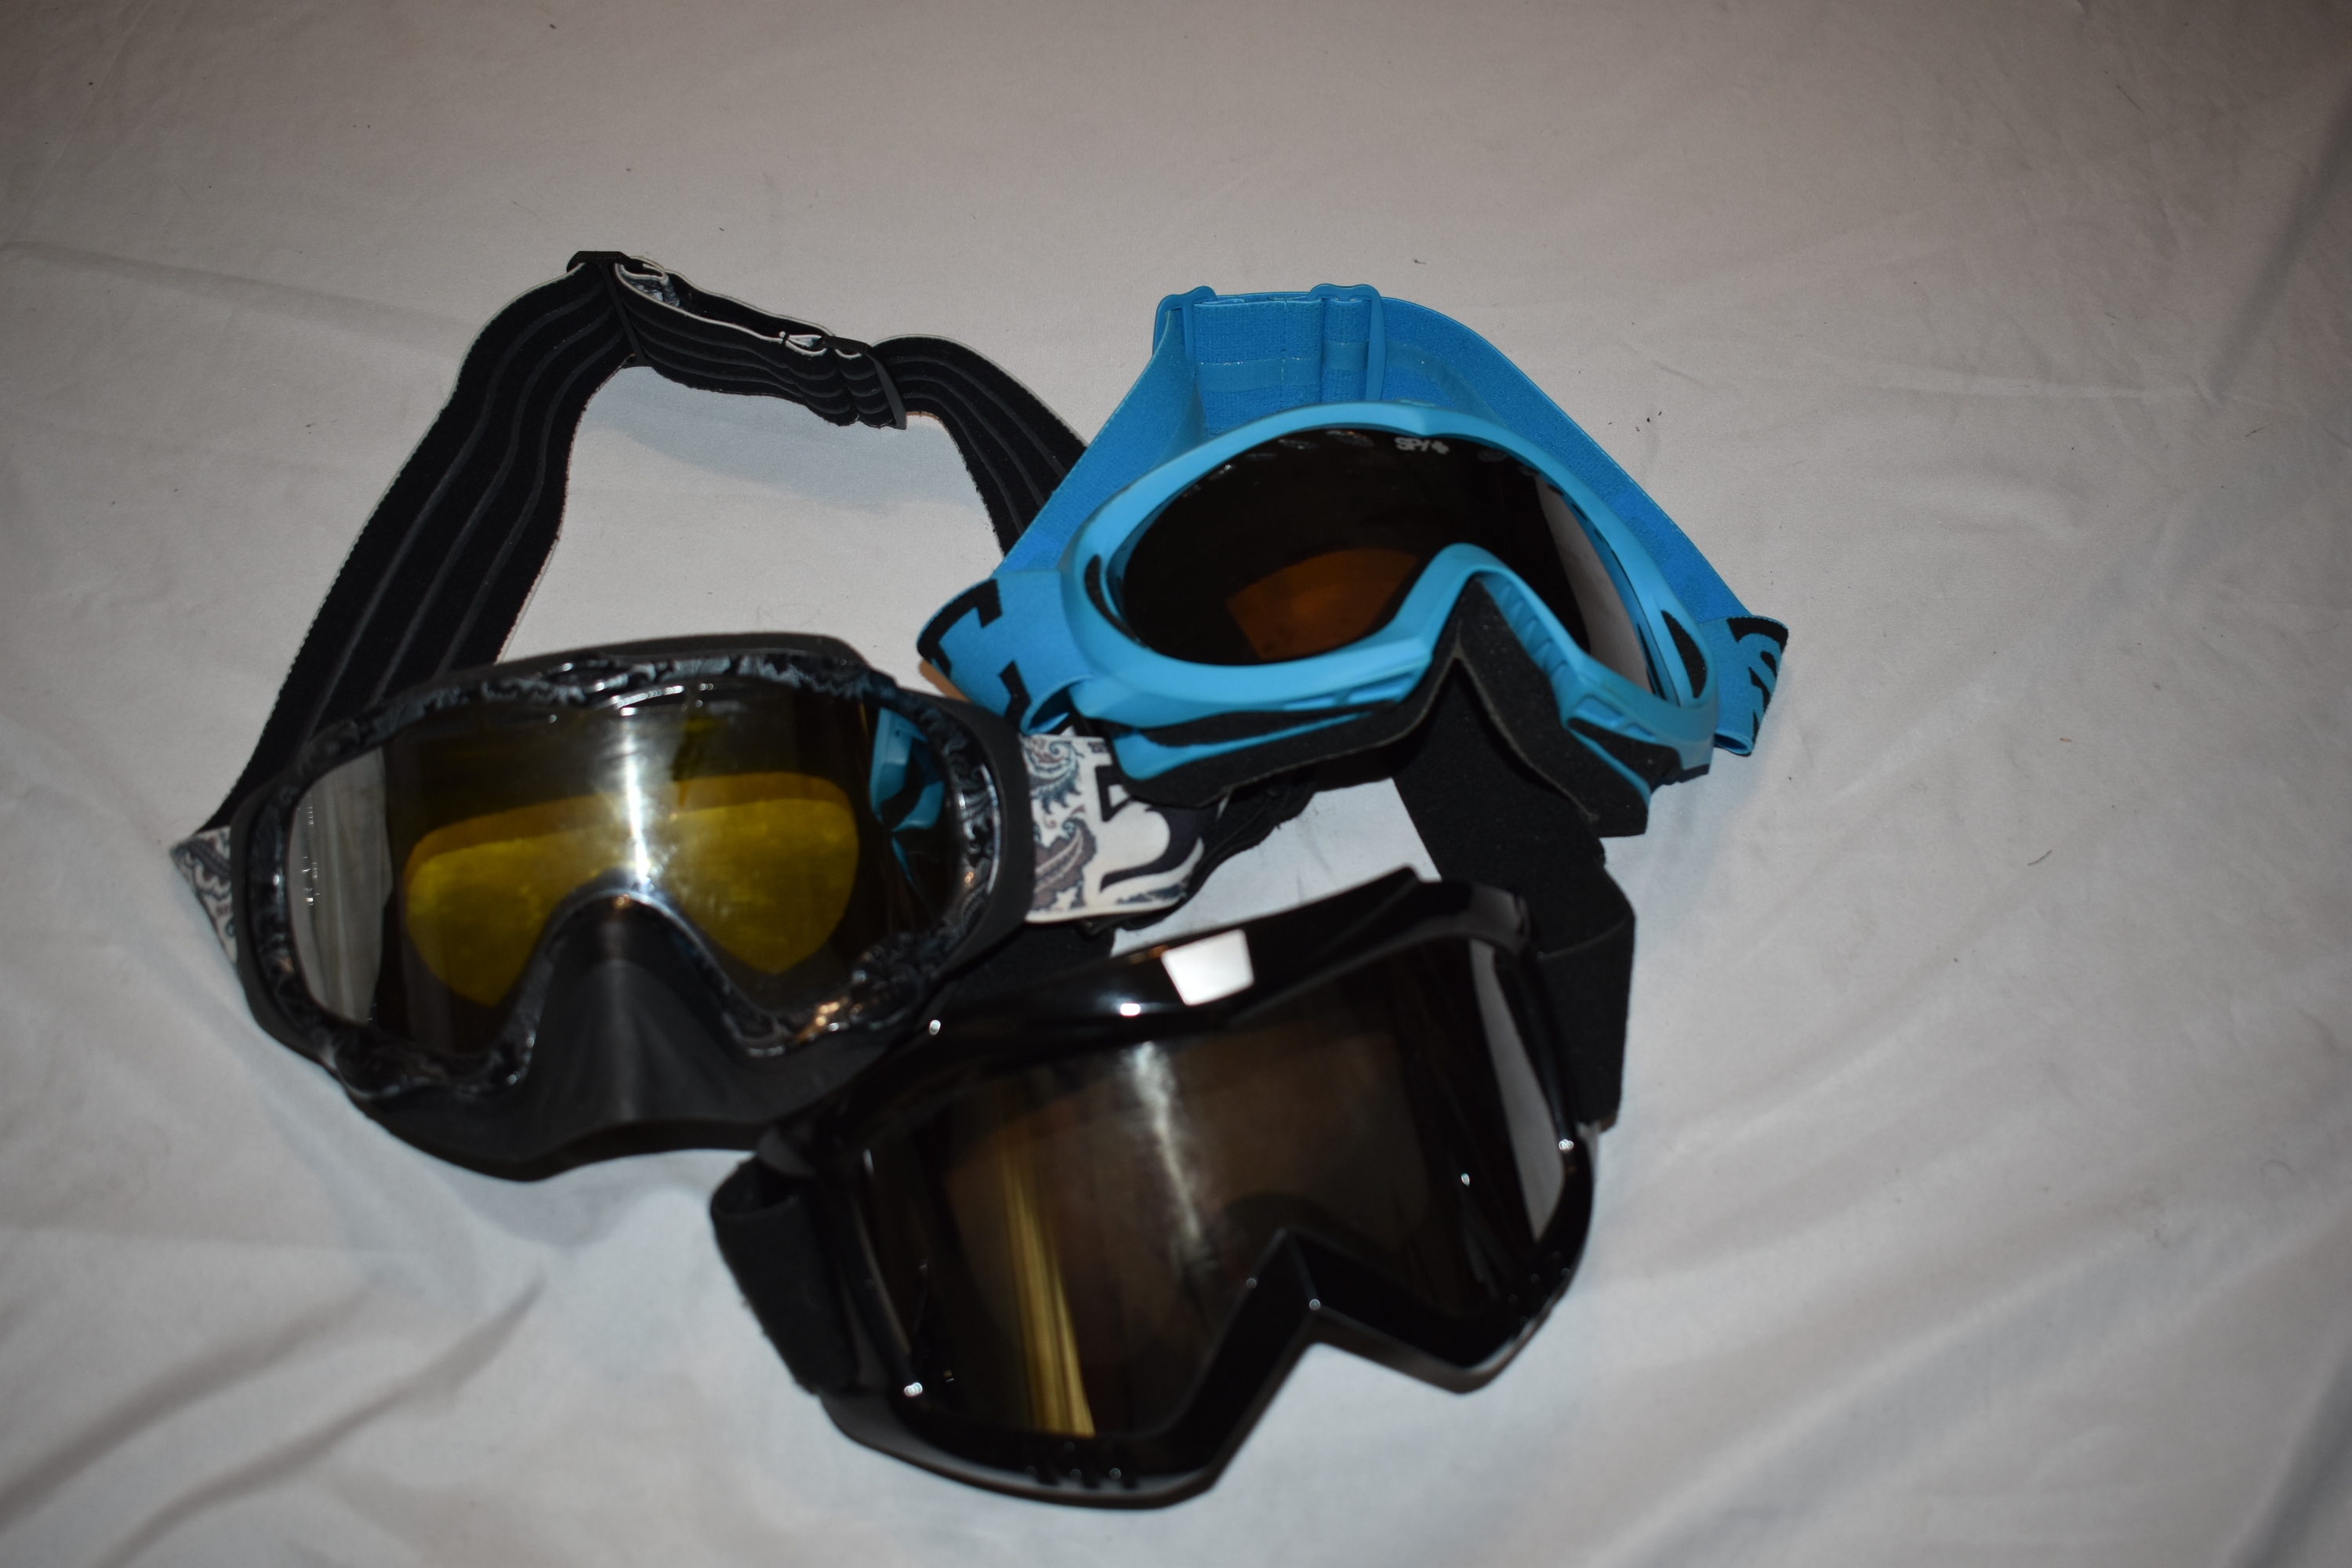 Lot of Ski/Snowboard Goggles - 3 Pair